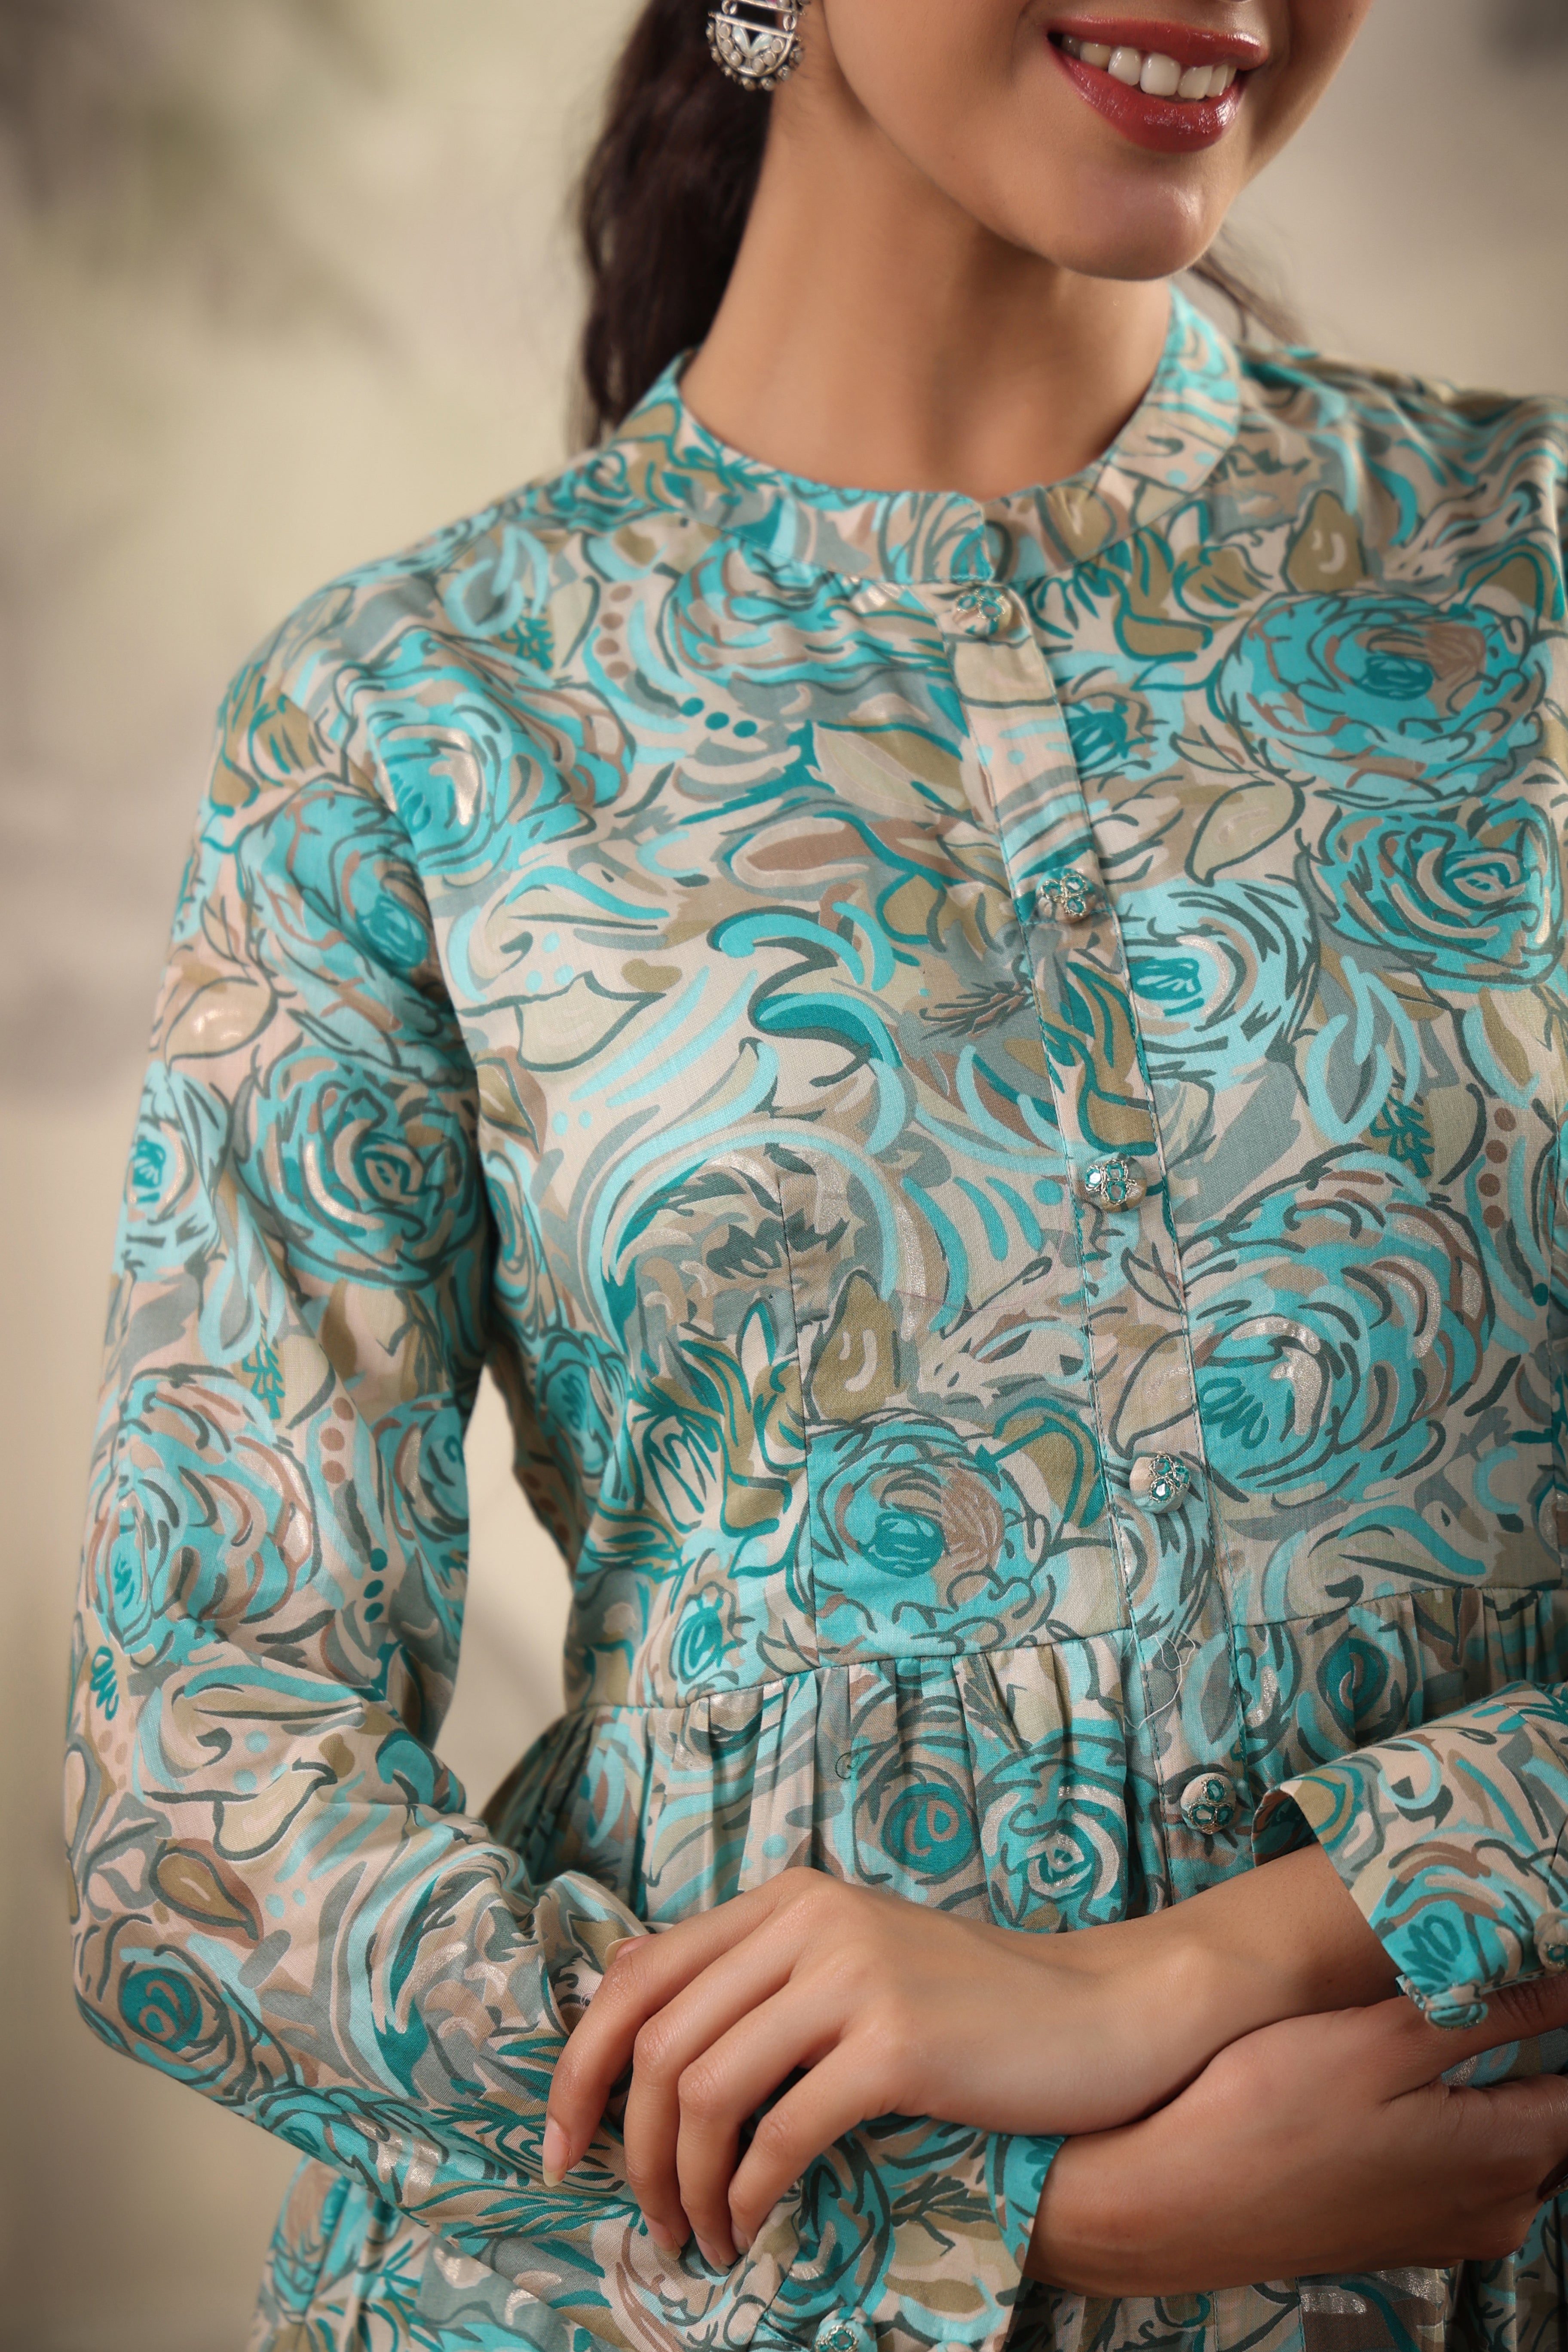 Aqua Mul Cotton Digital Floral Print Tiered Ethnic Dress